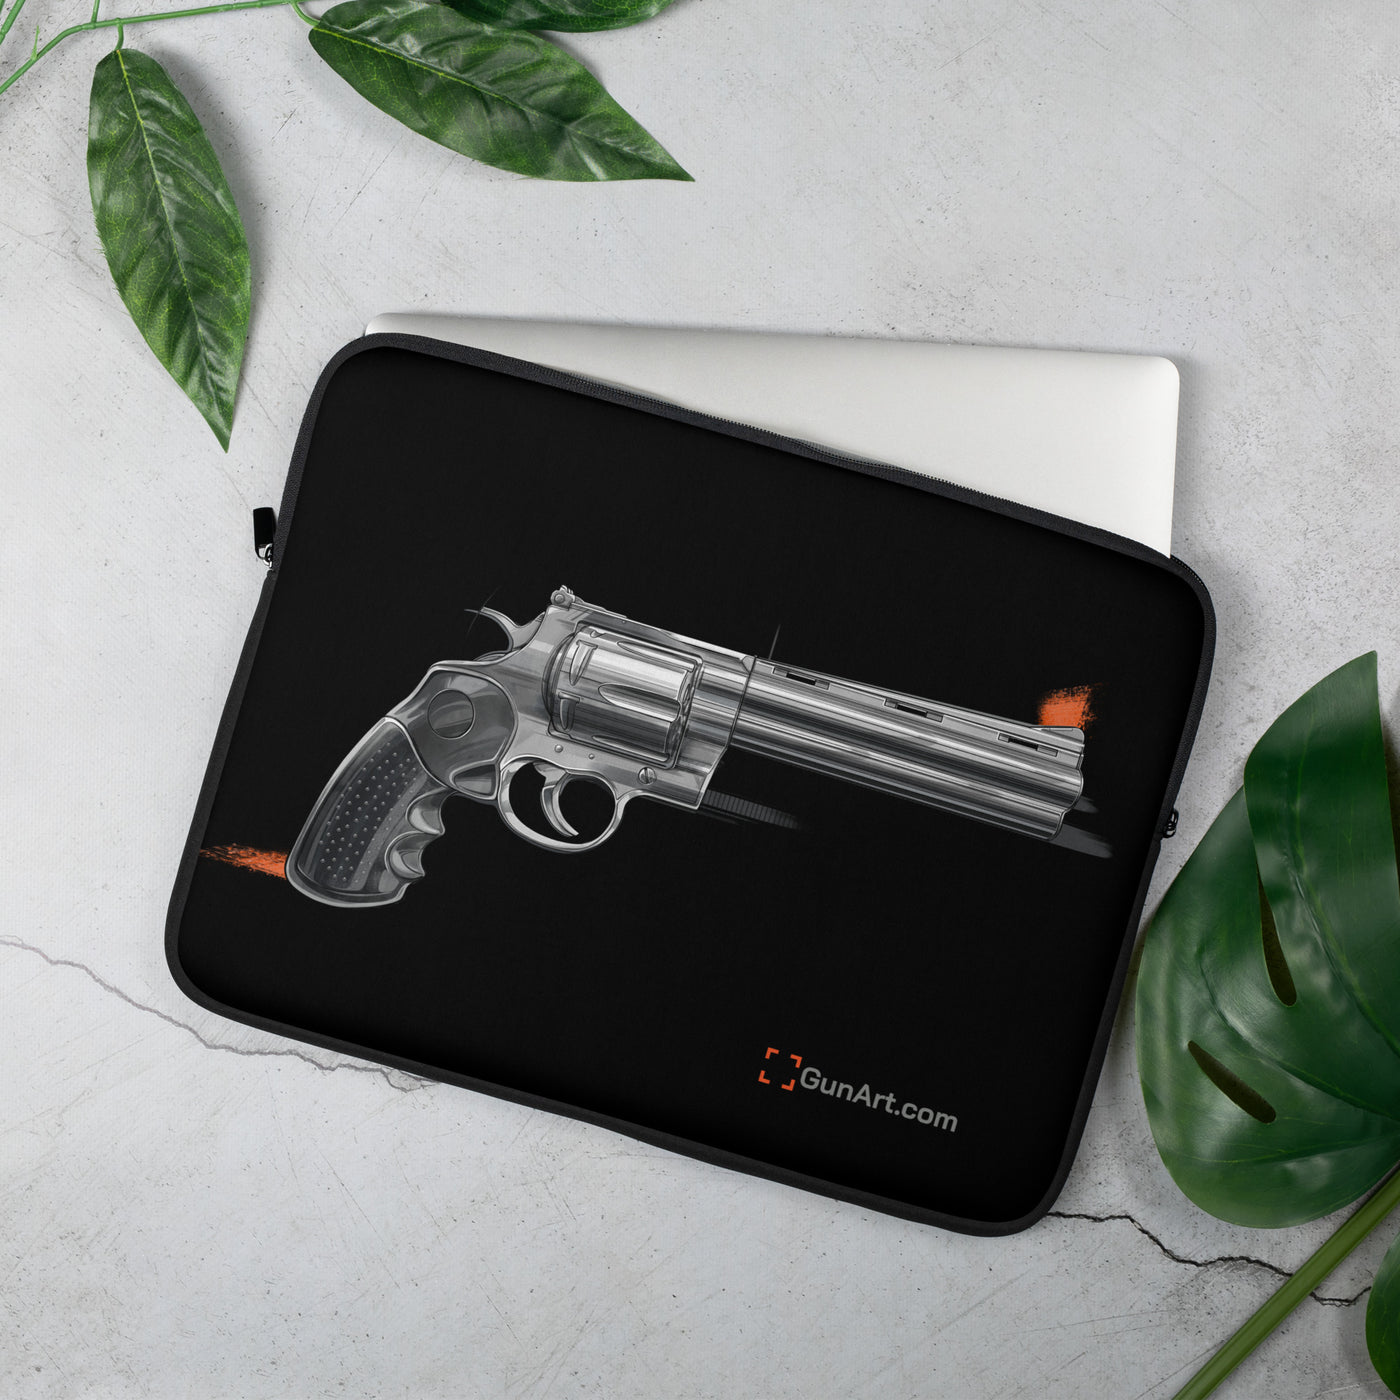 Stainless .44 Mag Revolver Laptop Sleeve - Black Background